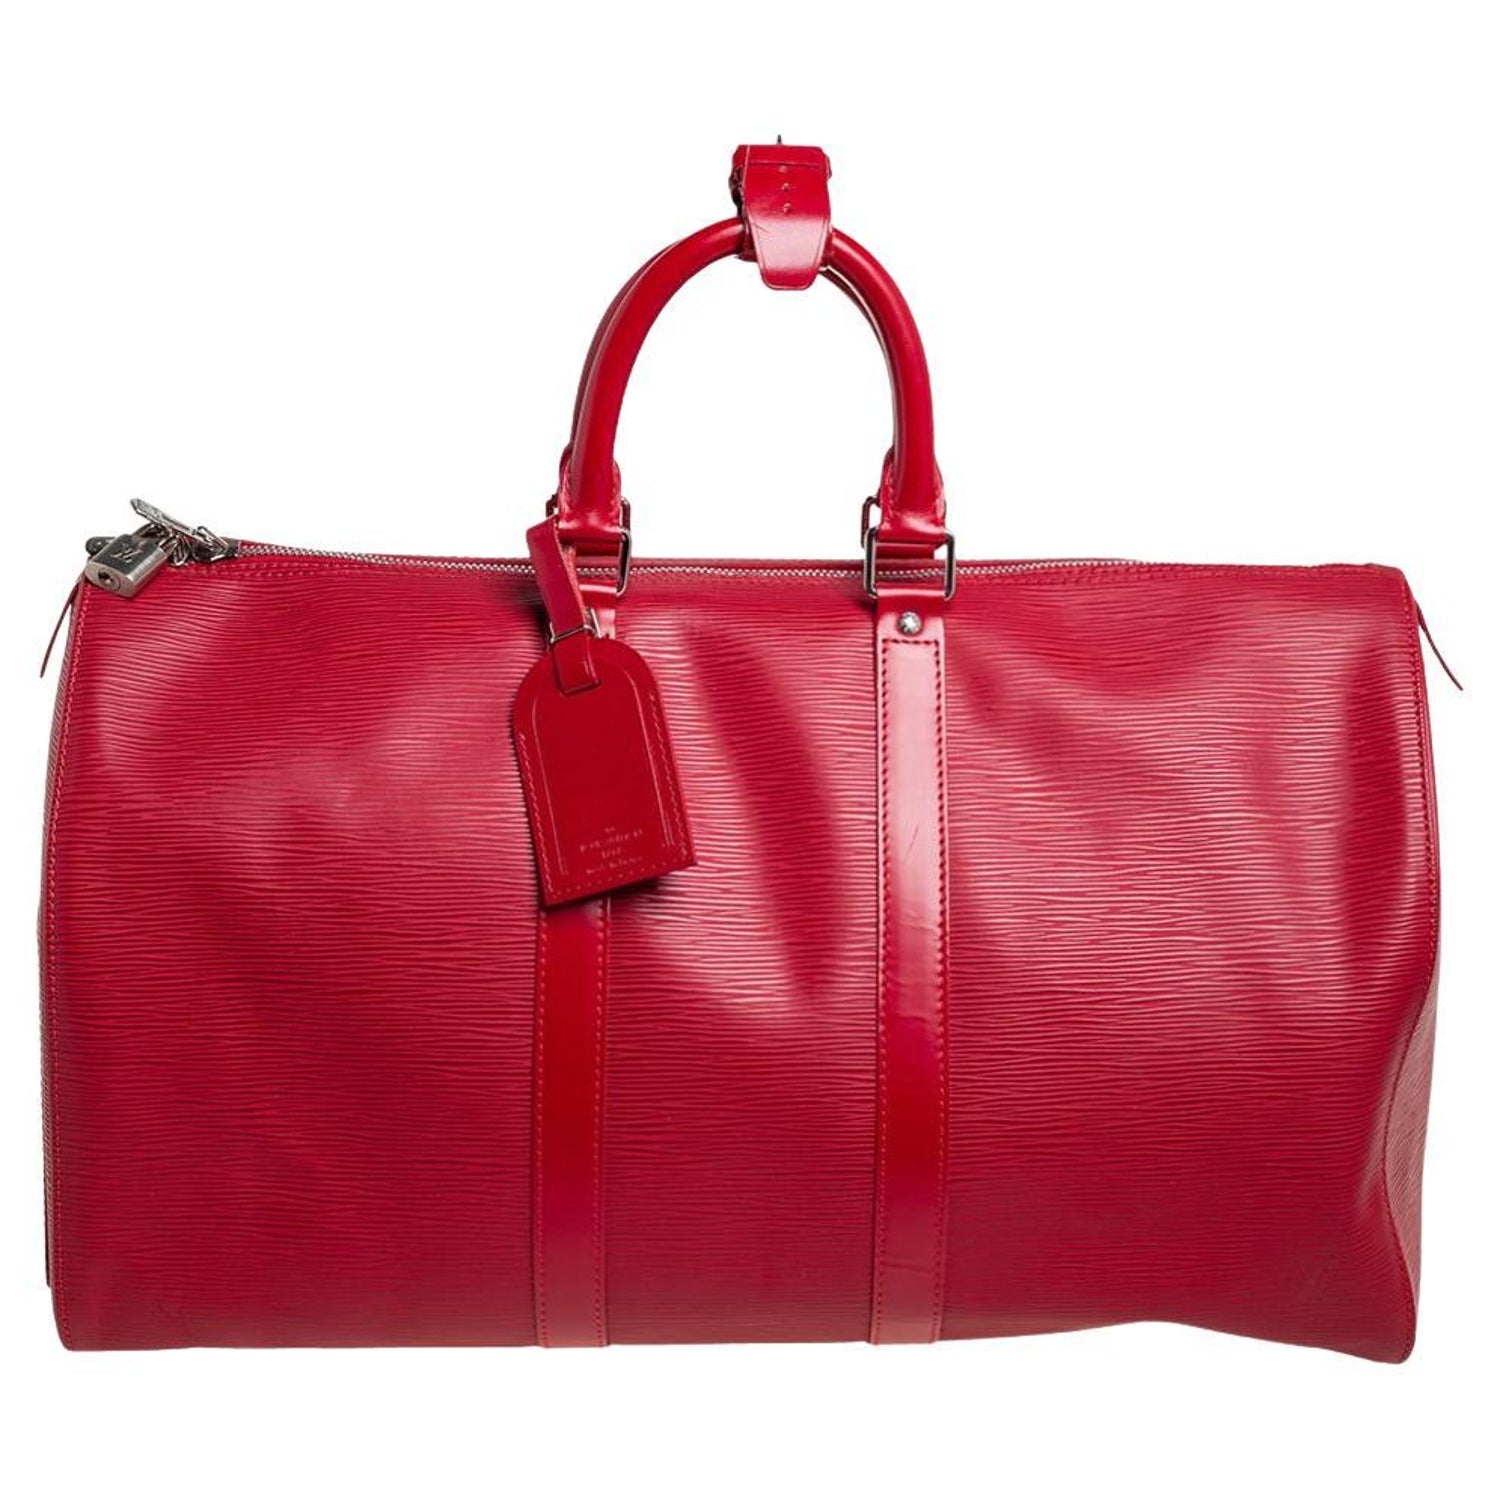 White and red Supreme X Louis Vuitton duffel bag photo – Free